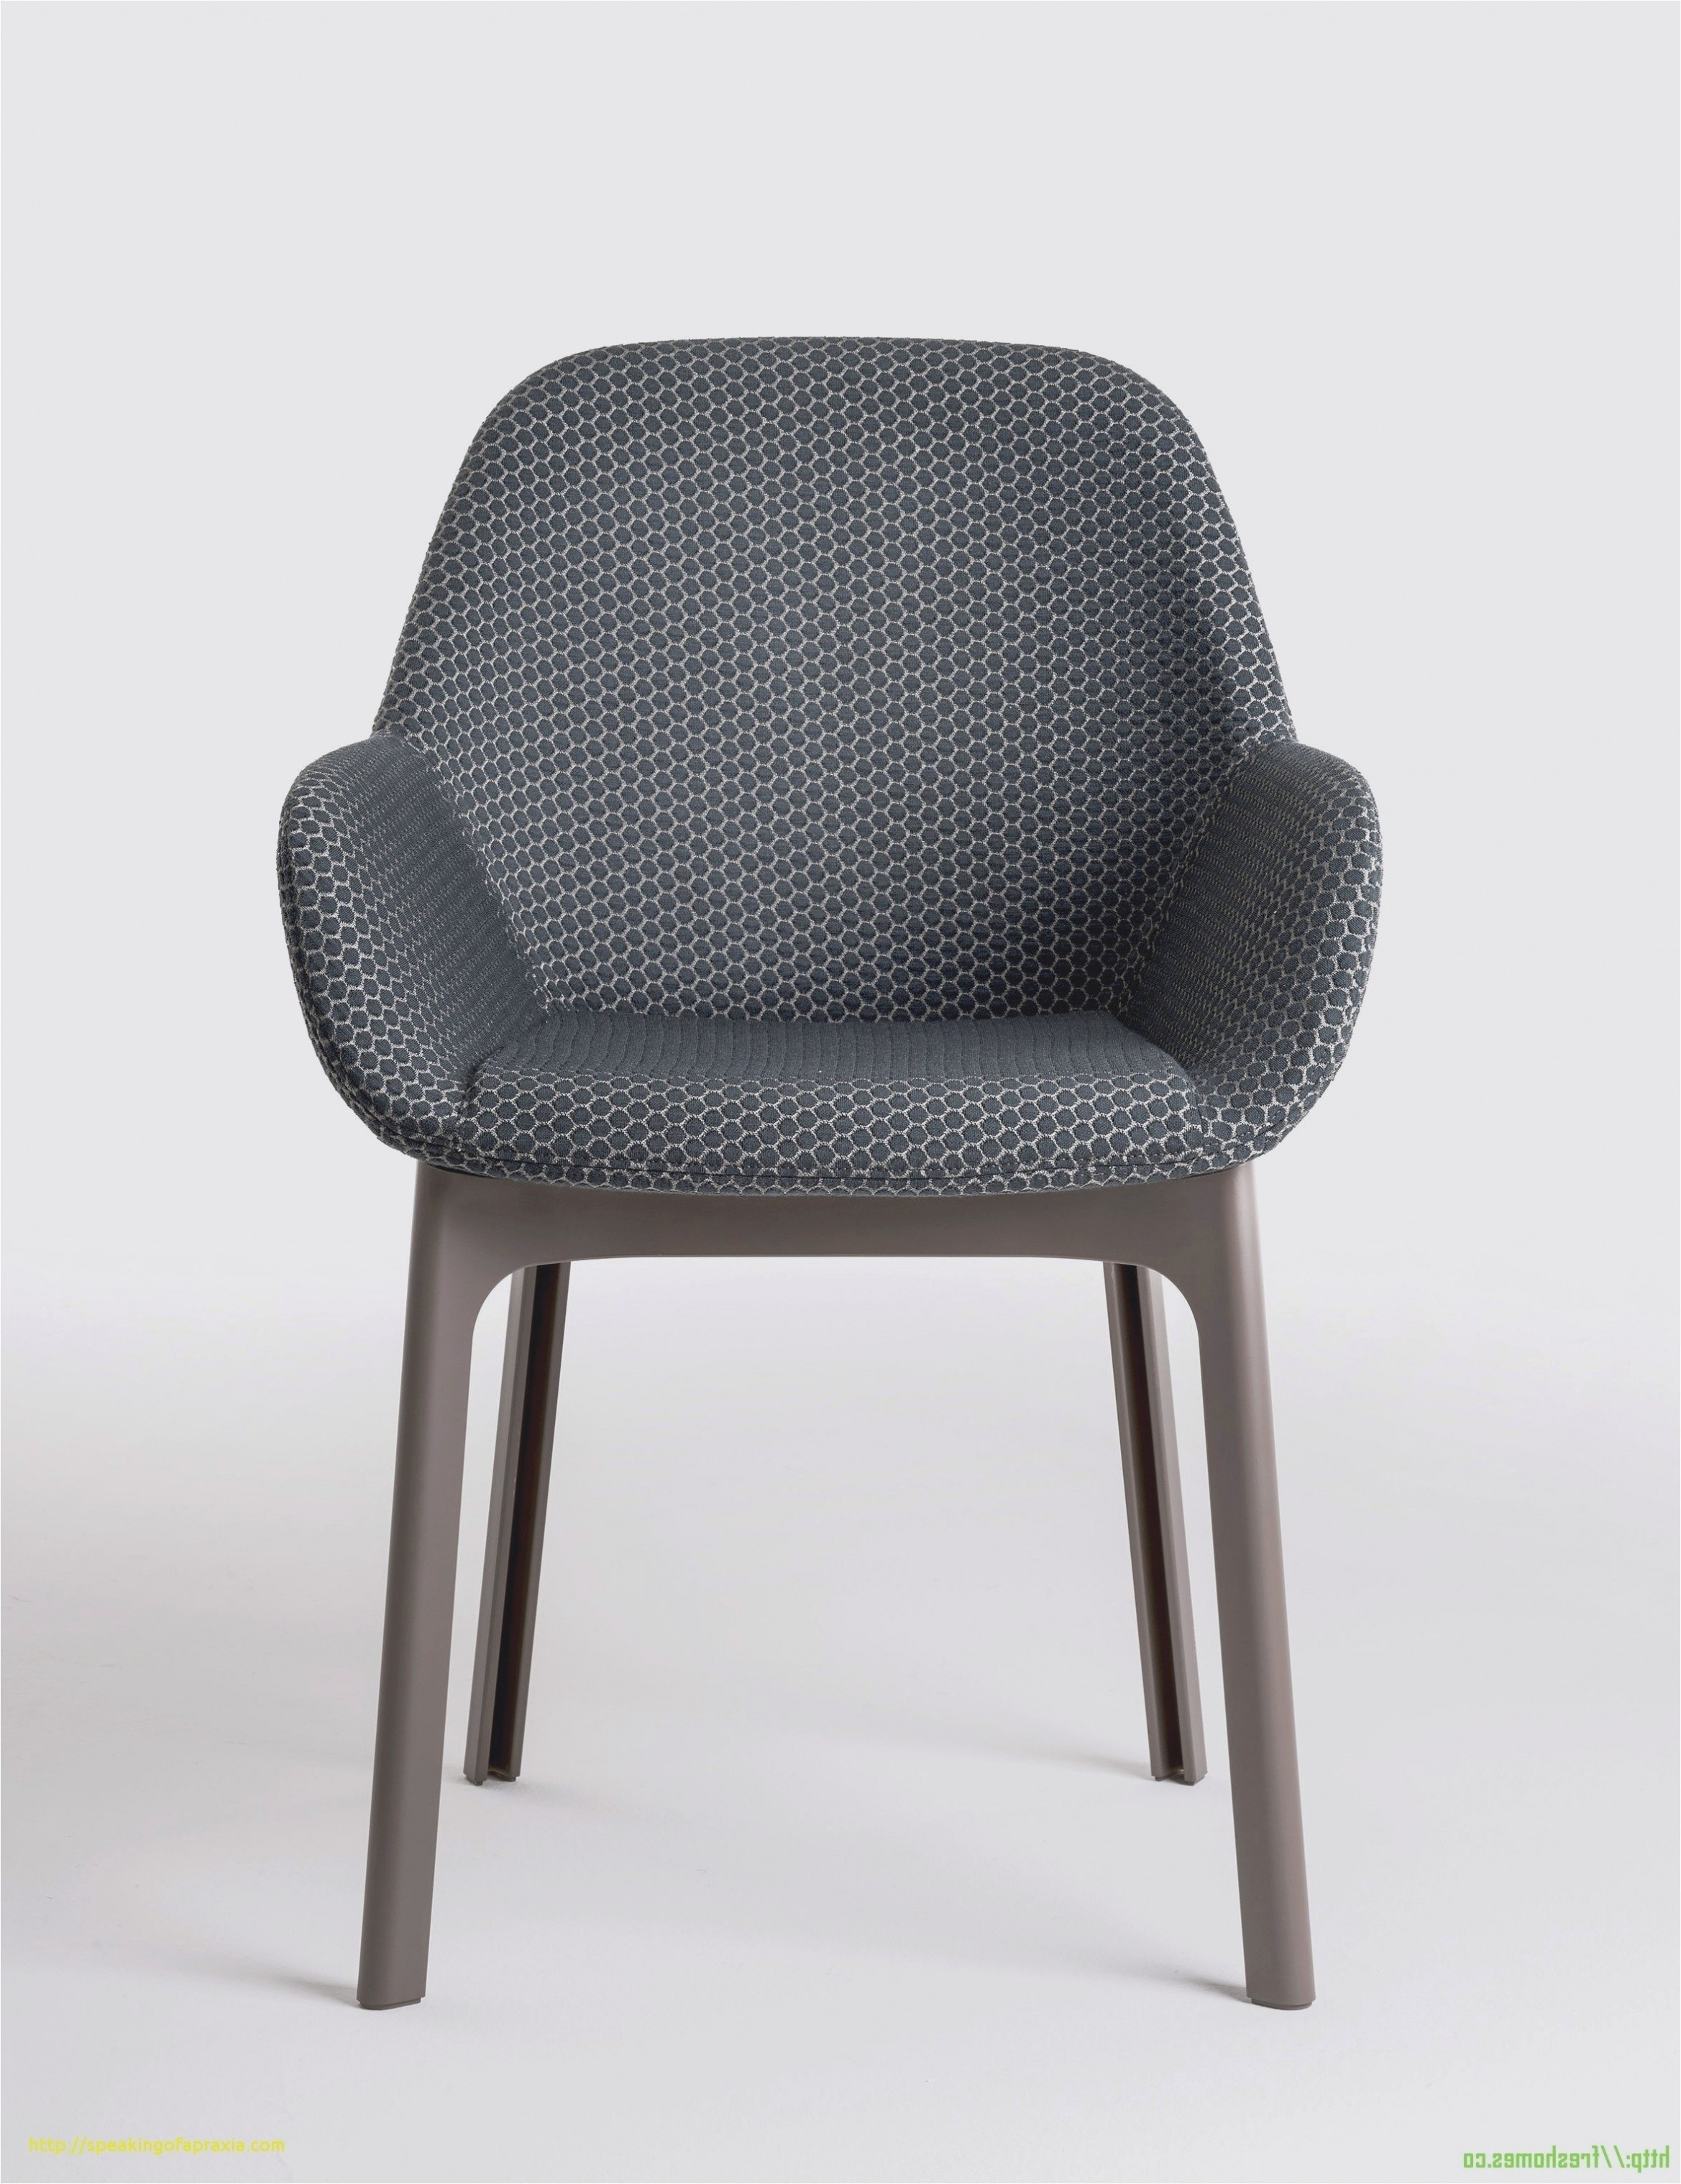 Galette chaise scandinave simili cuir